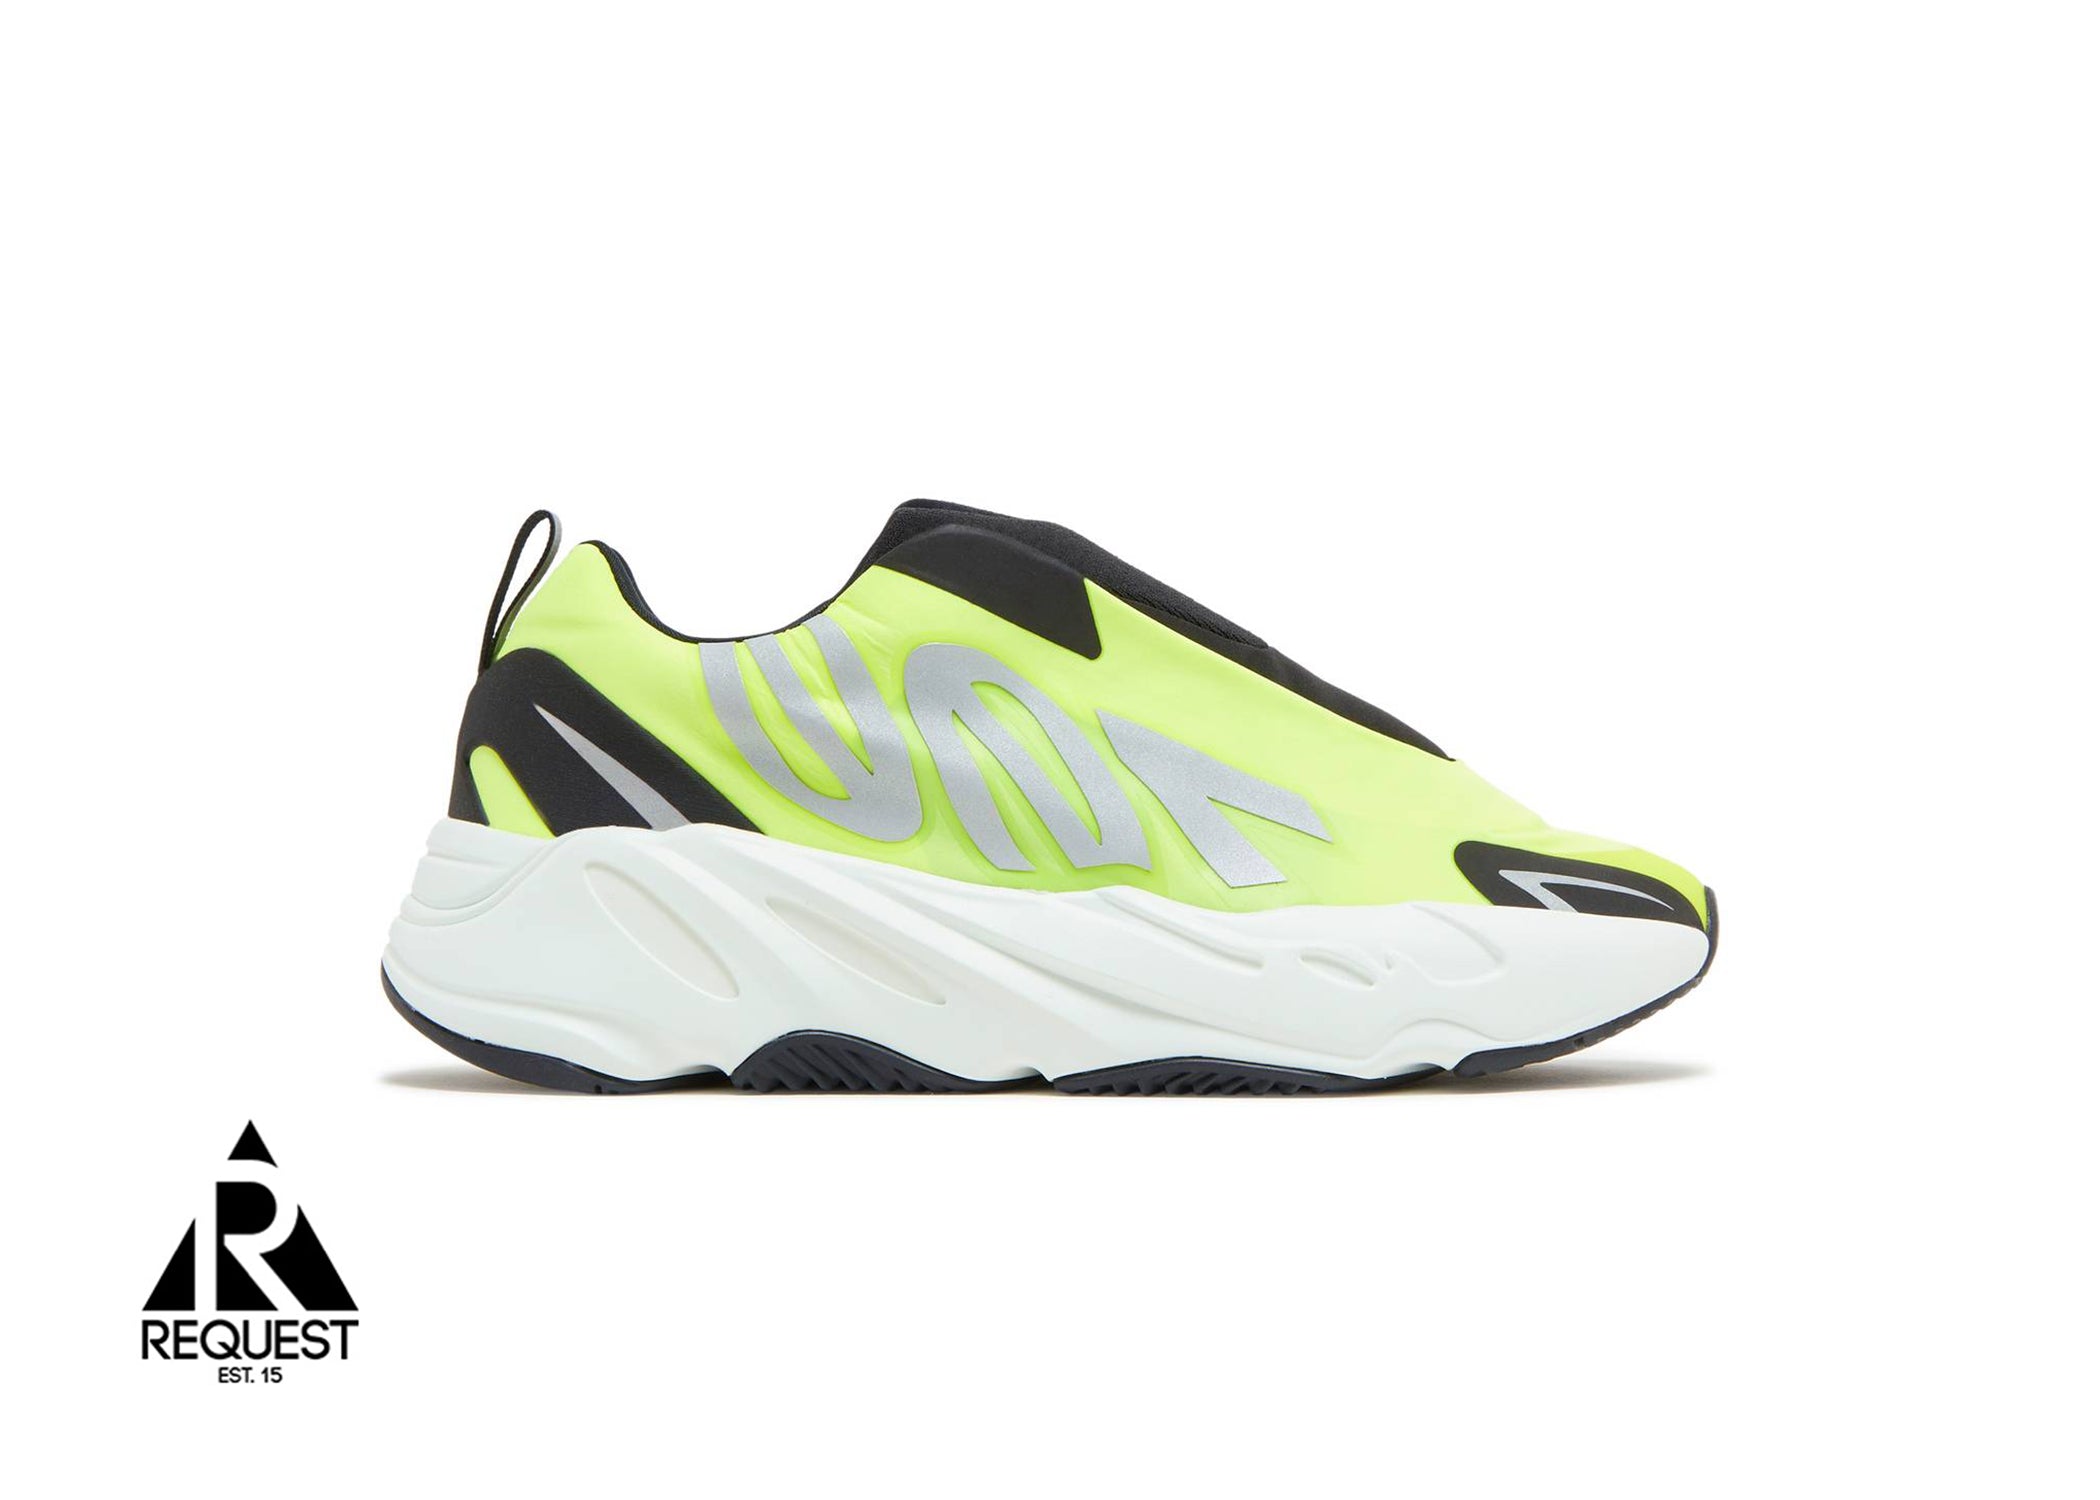 Adidas Yeezy Boost 700 MNVN Laceless "Phosphor"